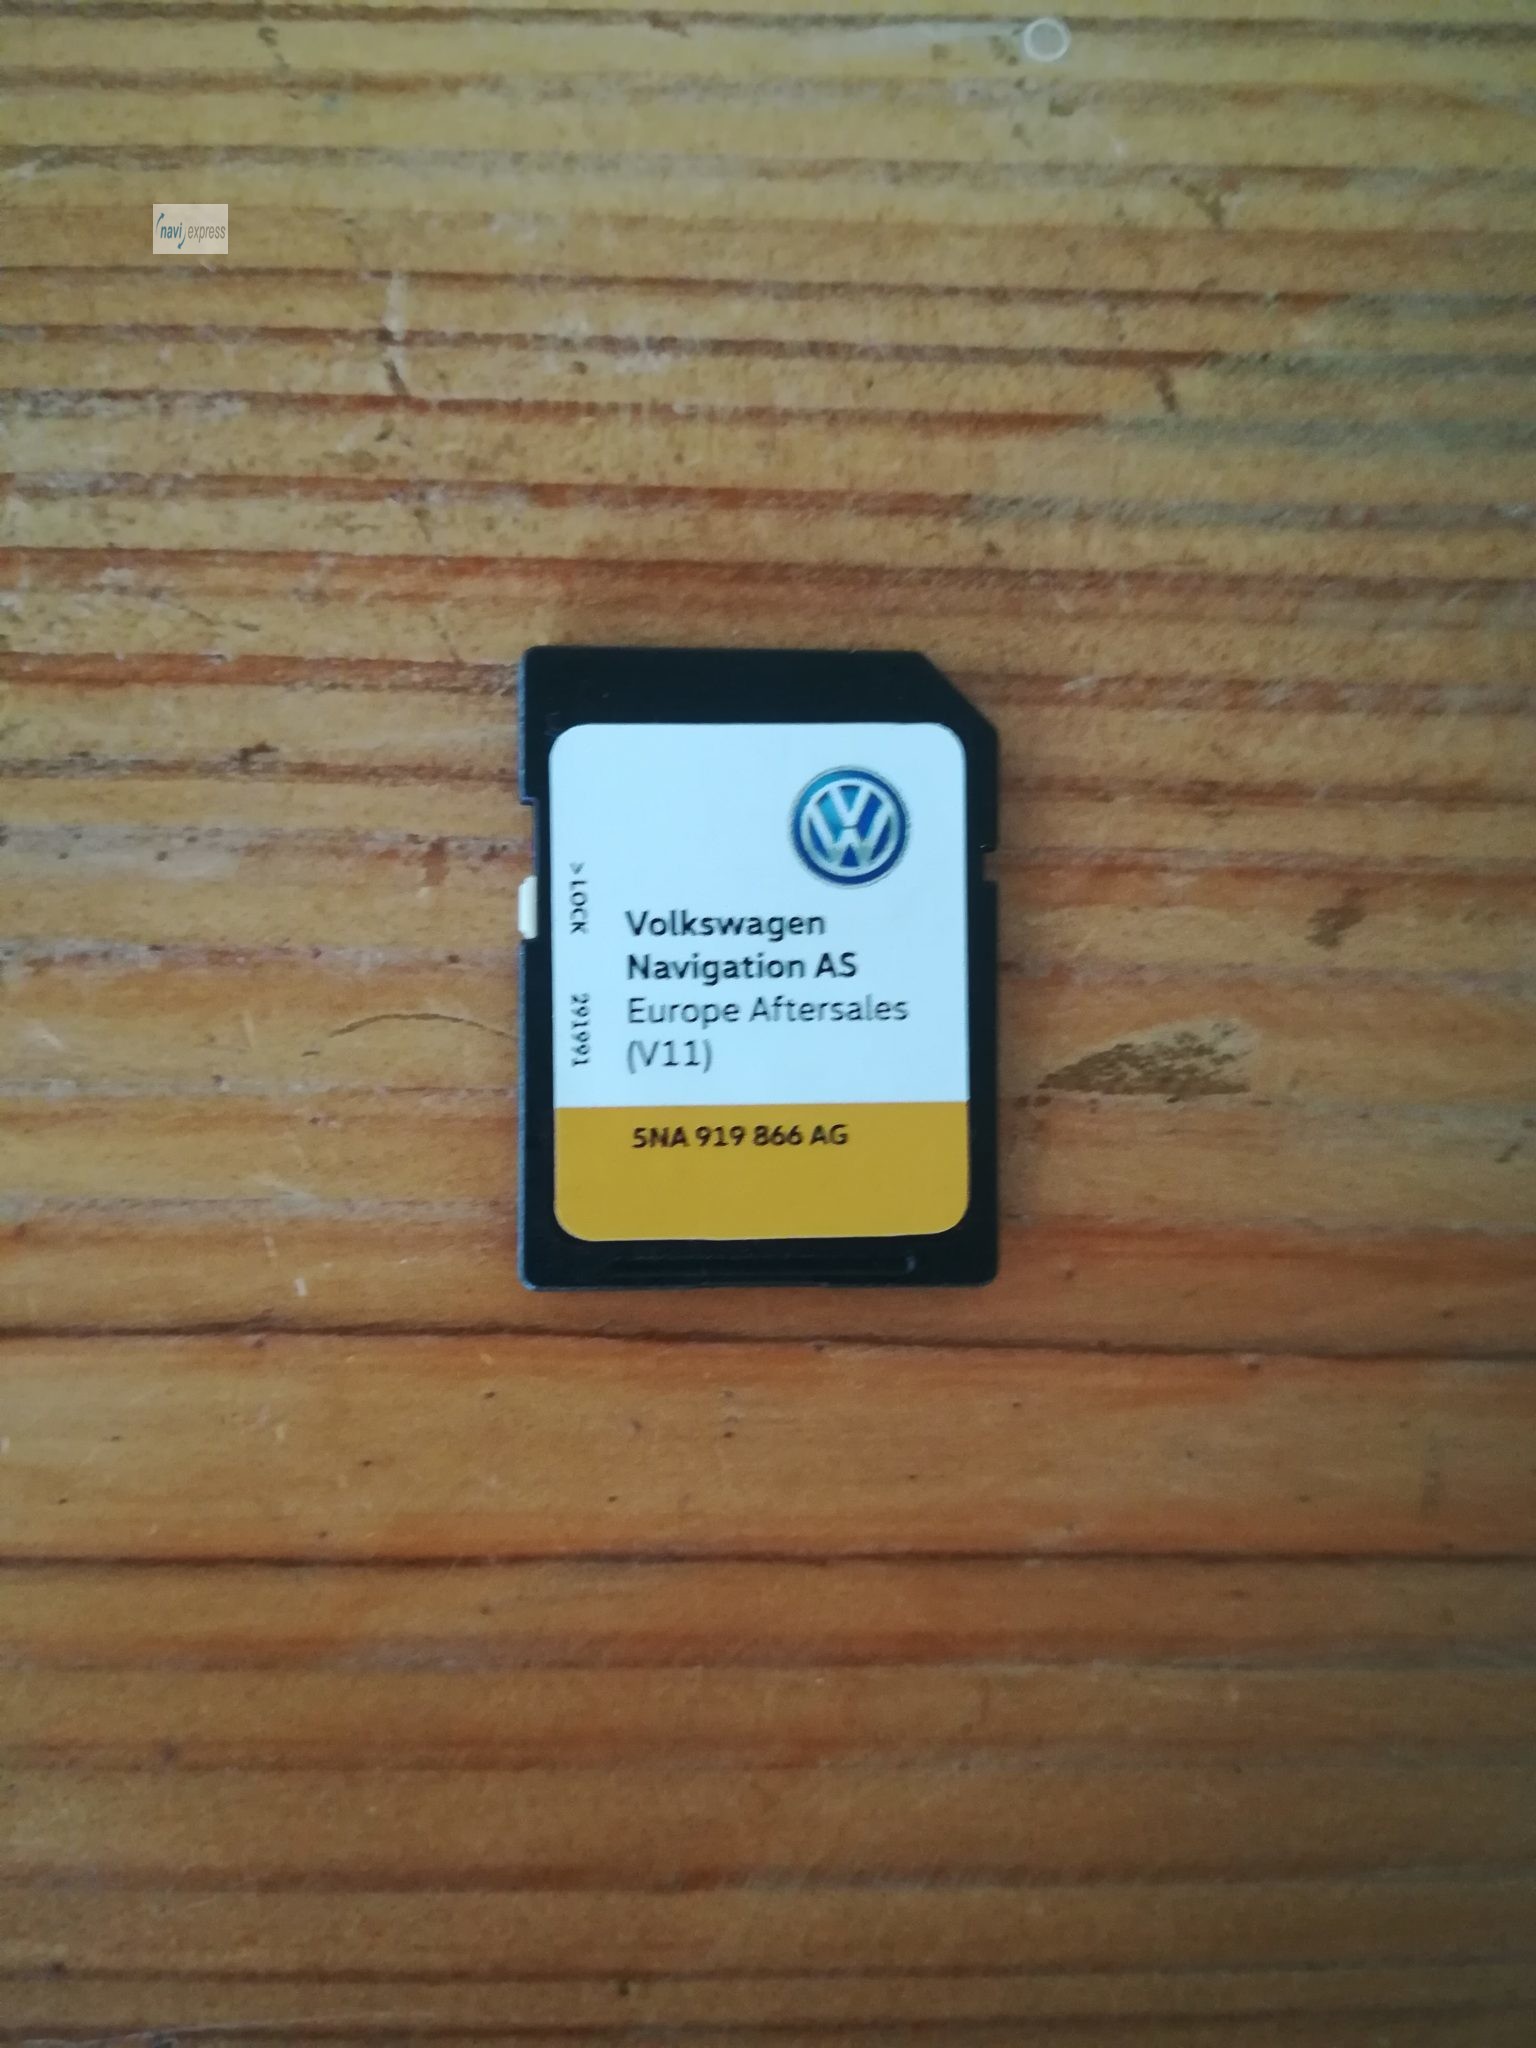 Volkswagen VW Navigation AS SD Karte Europa Aftersales V11 aktualisiert